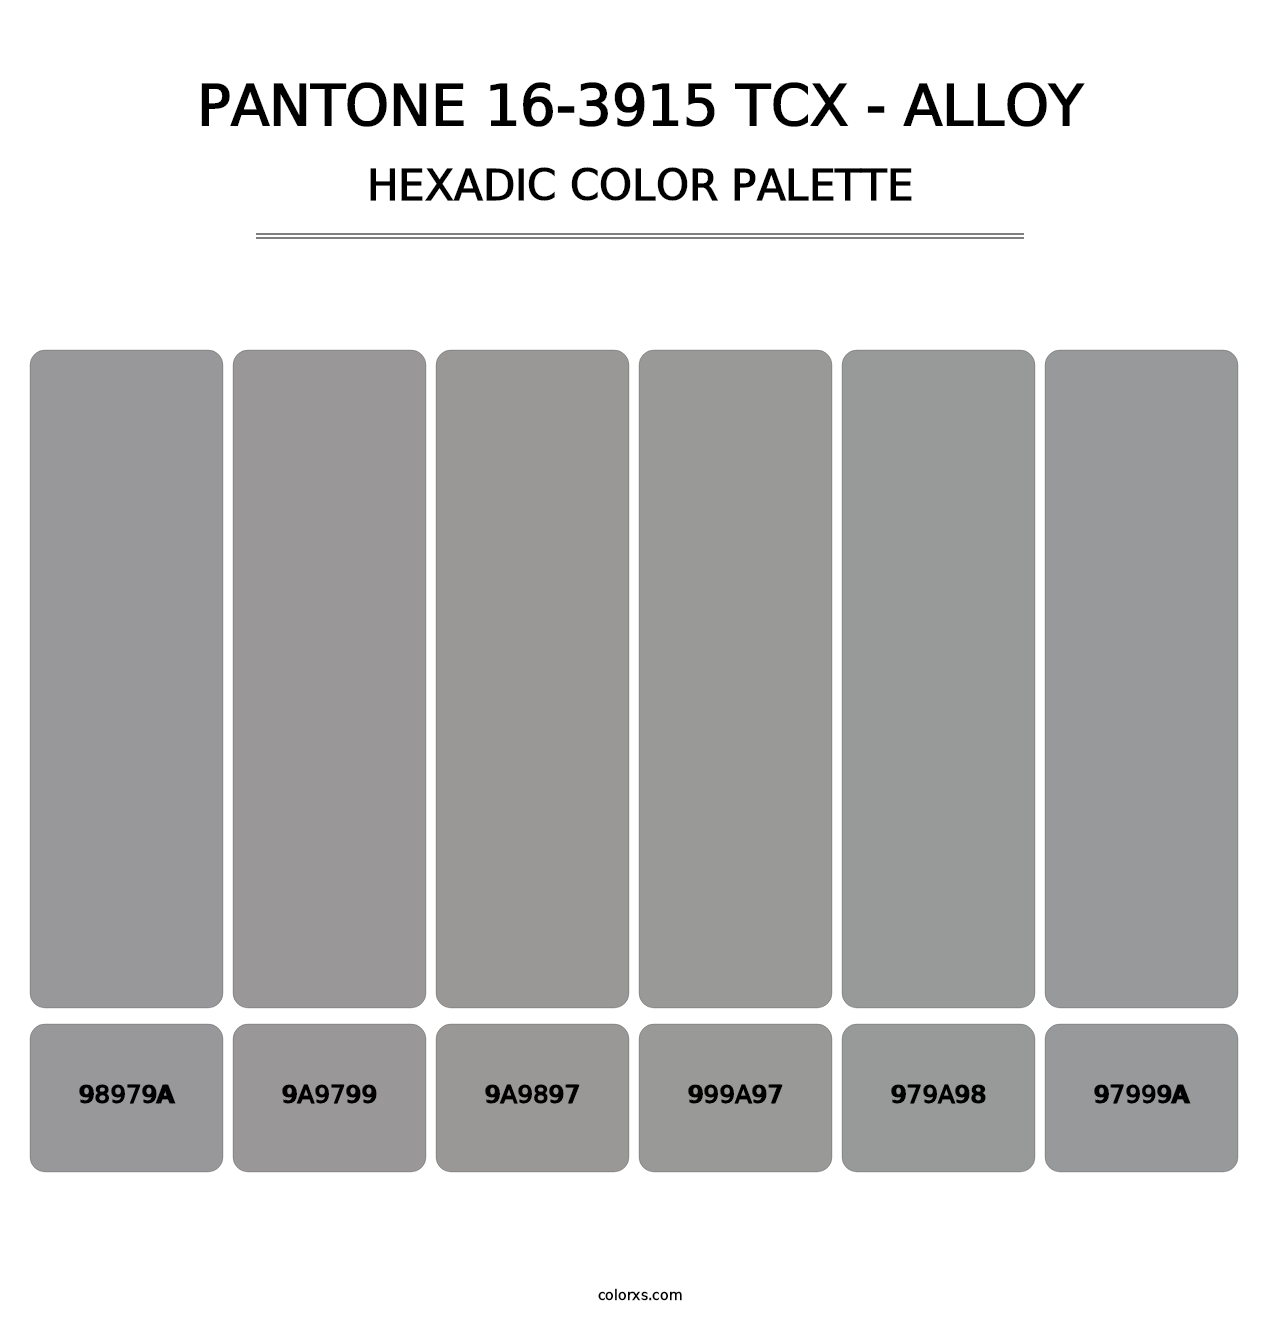 PANTONE 16-3915 TCX - Alloy - Hexadic Color Palette